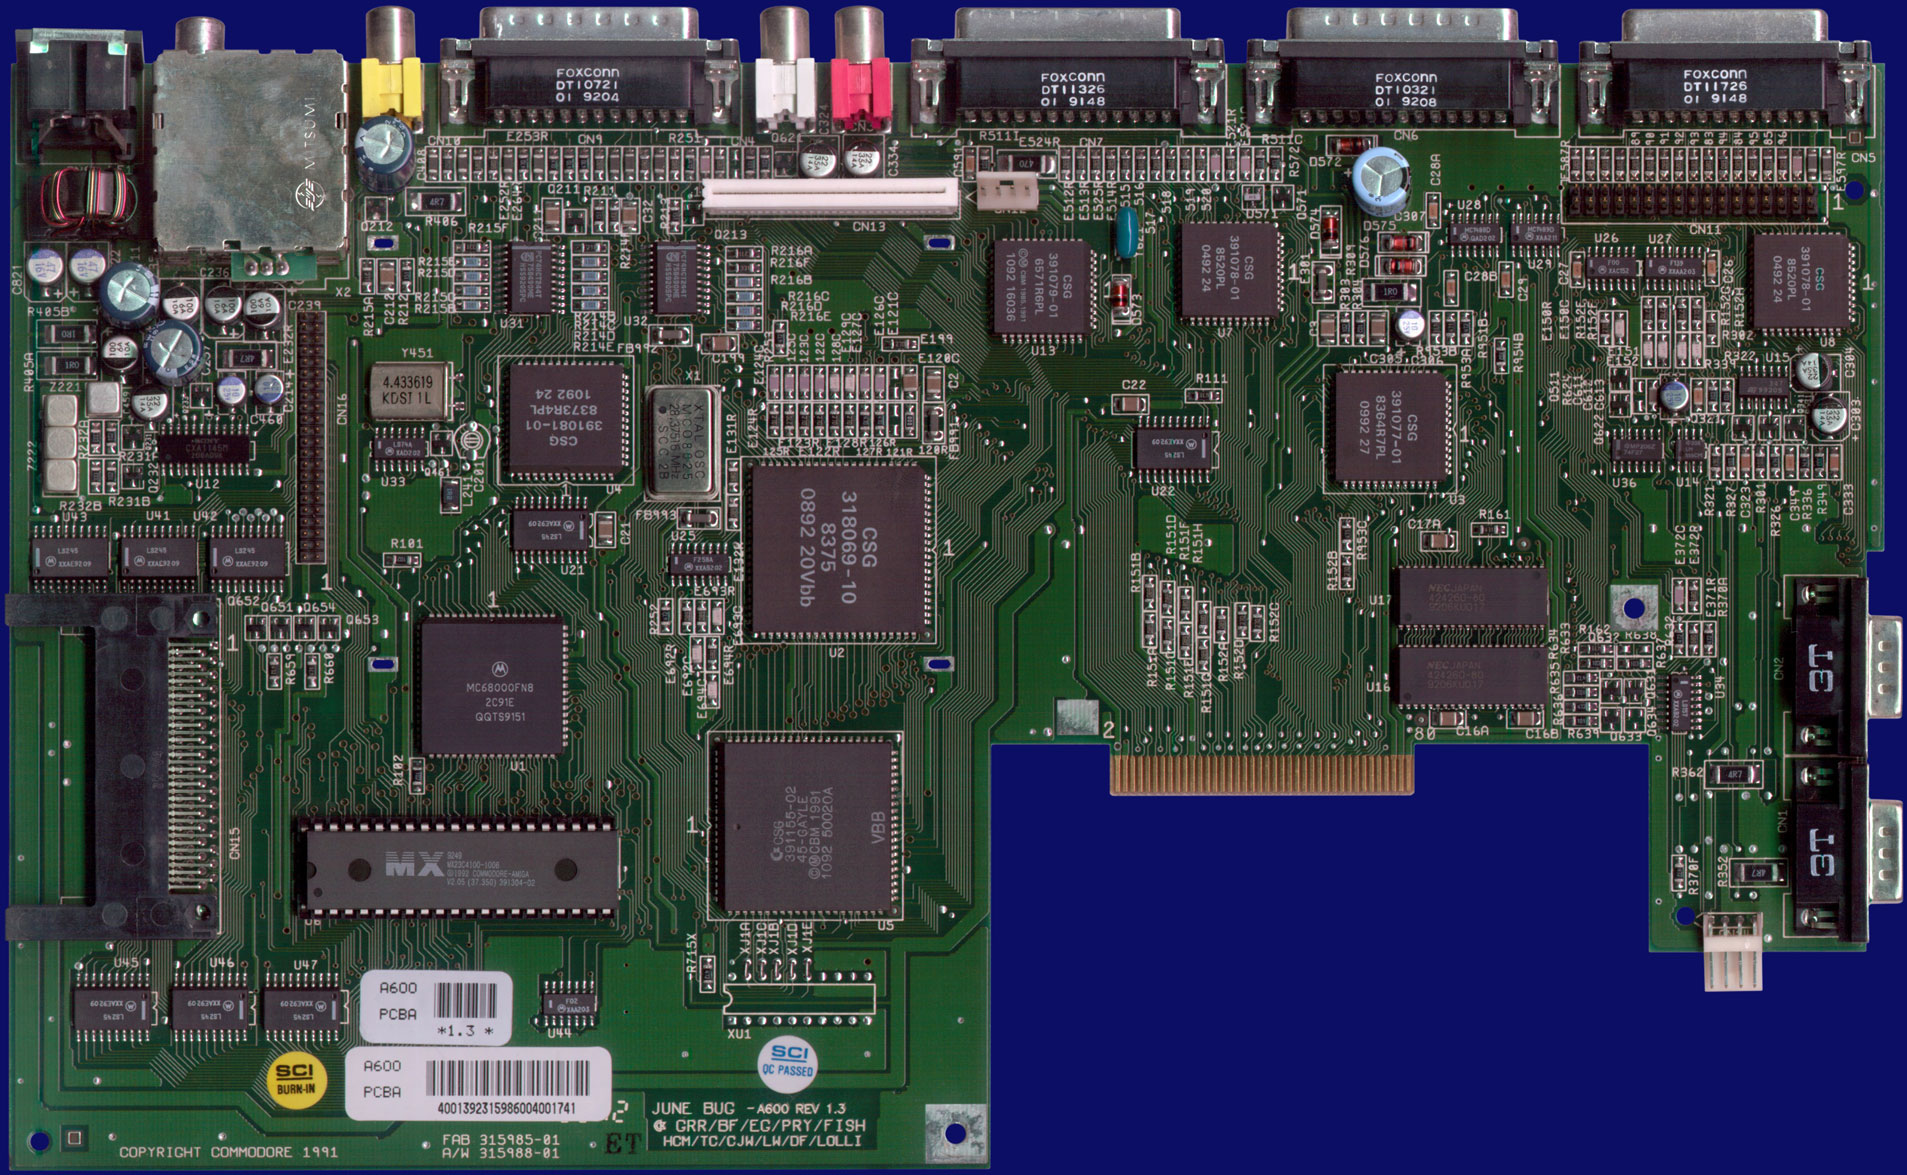 Commodore Amiga 600 - Rev 1.3 motherboard, front side